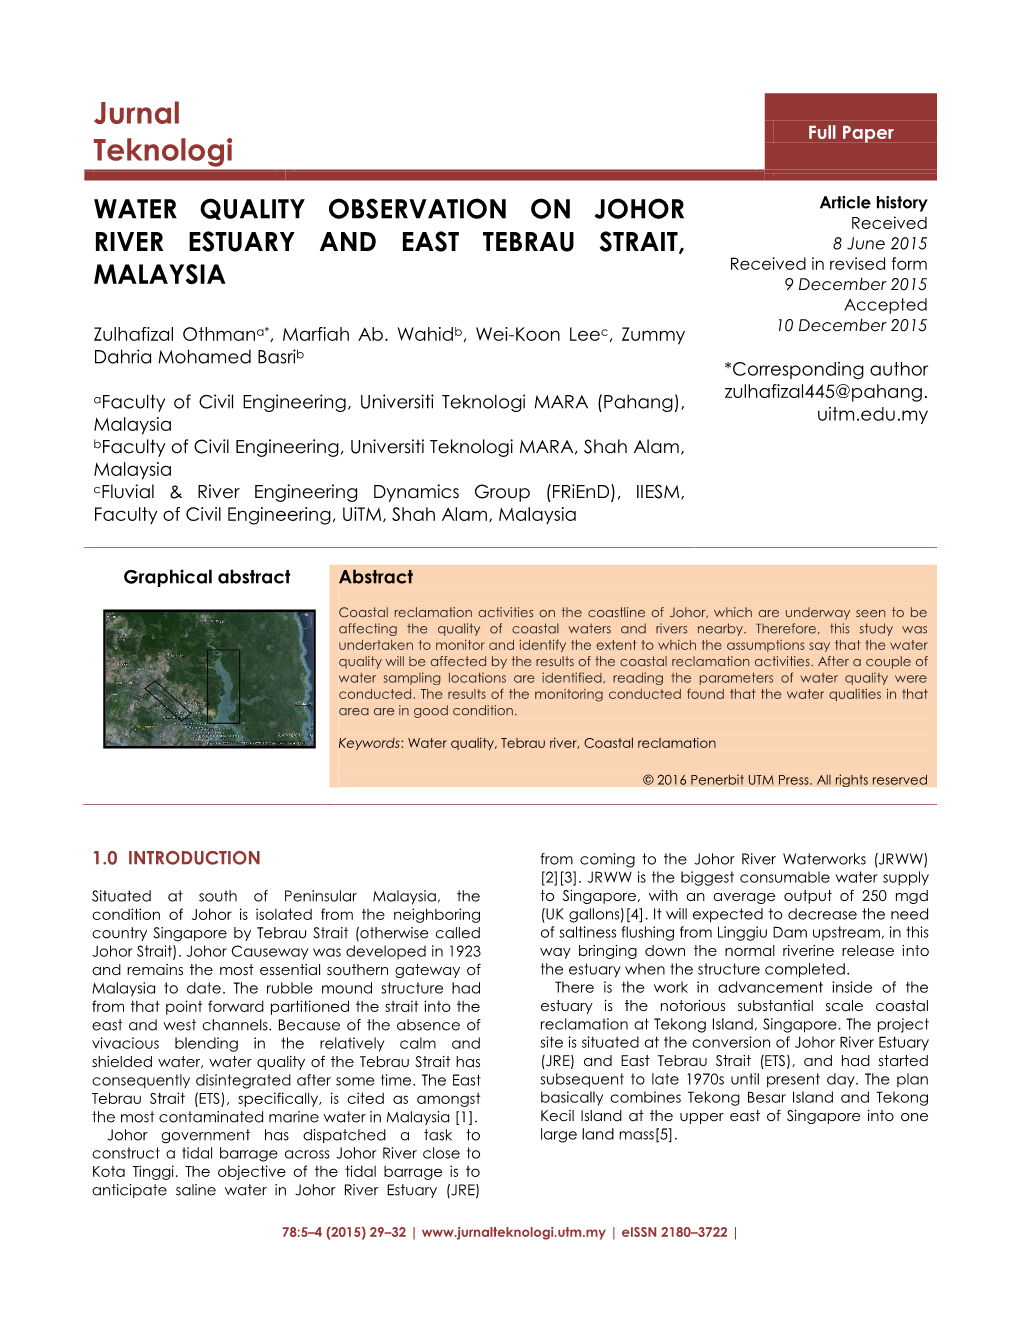 Water Quality Observation on Johor River Estuary and East Tebrau Strait